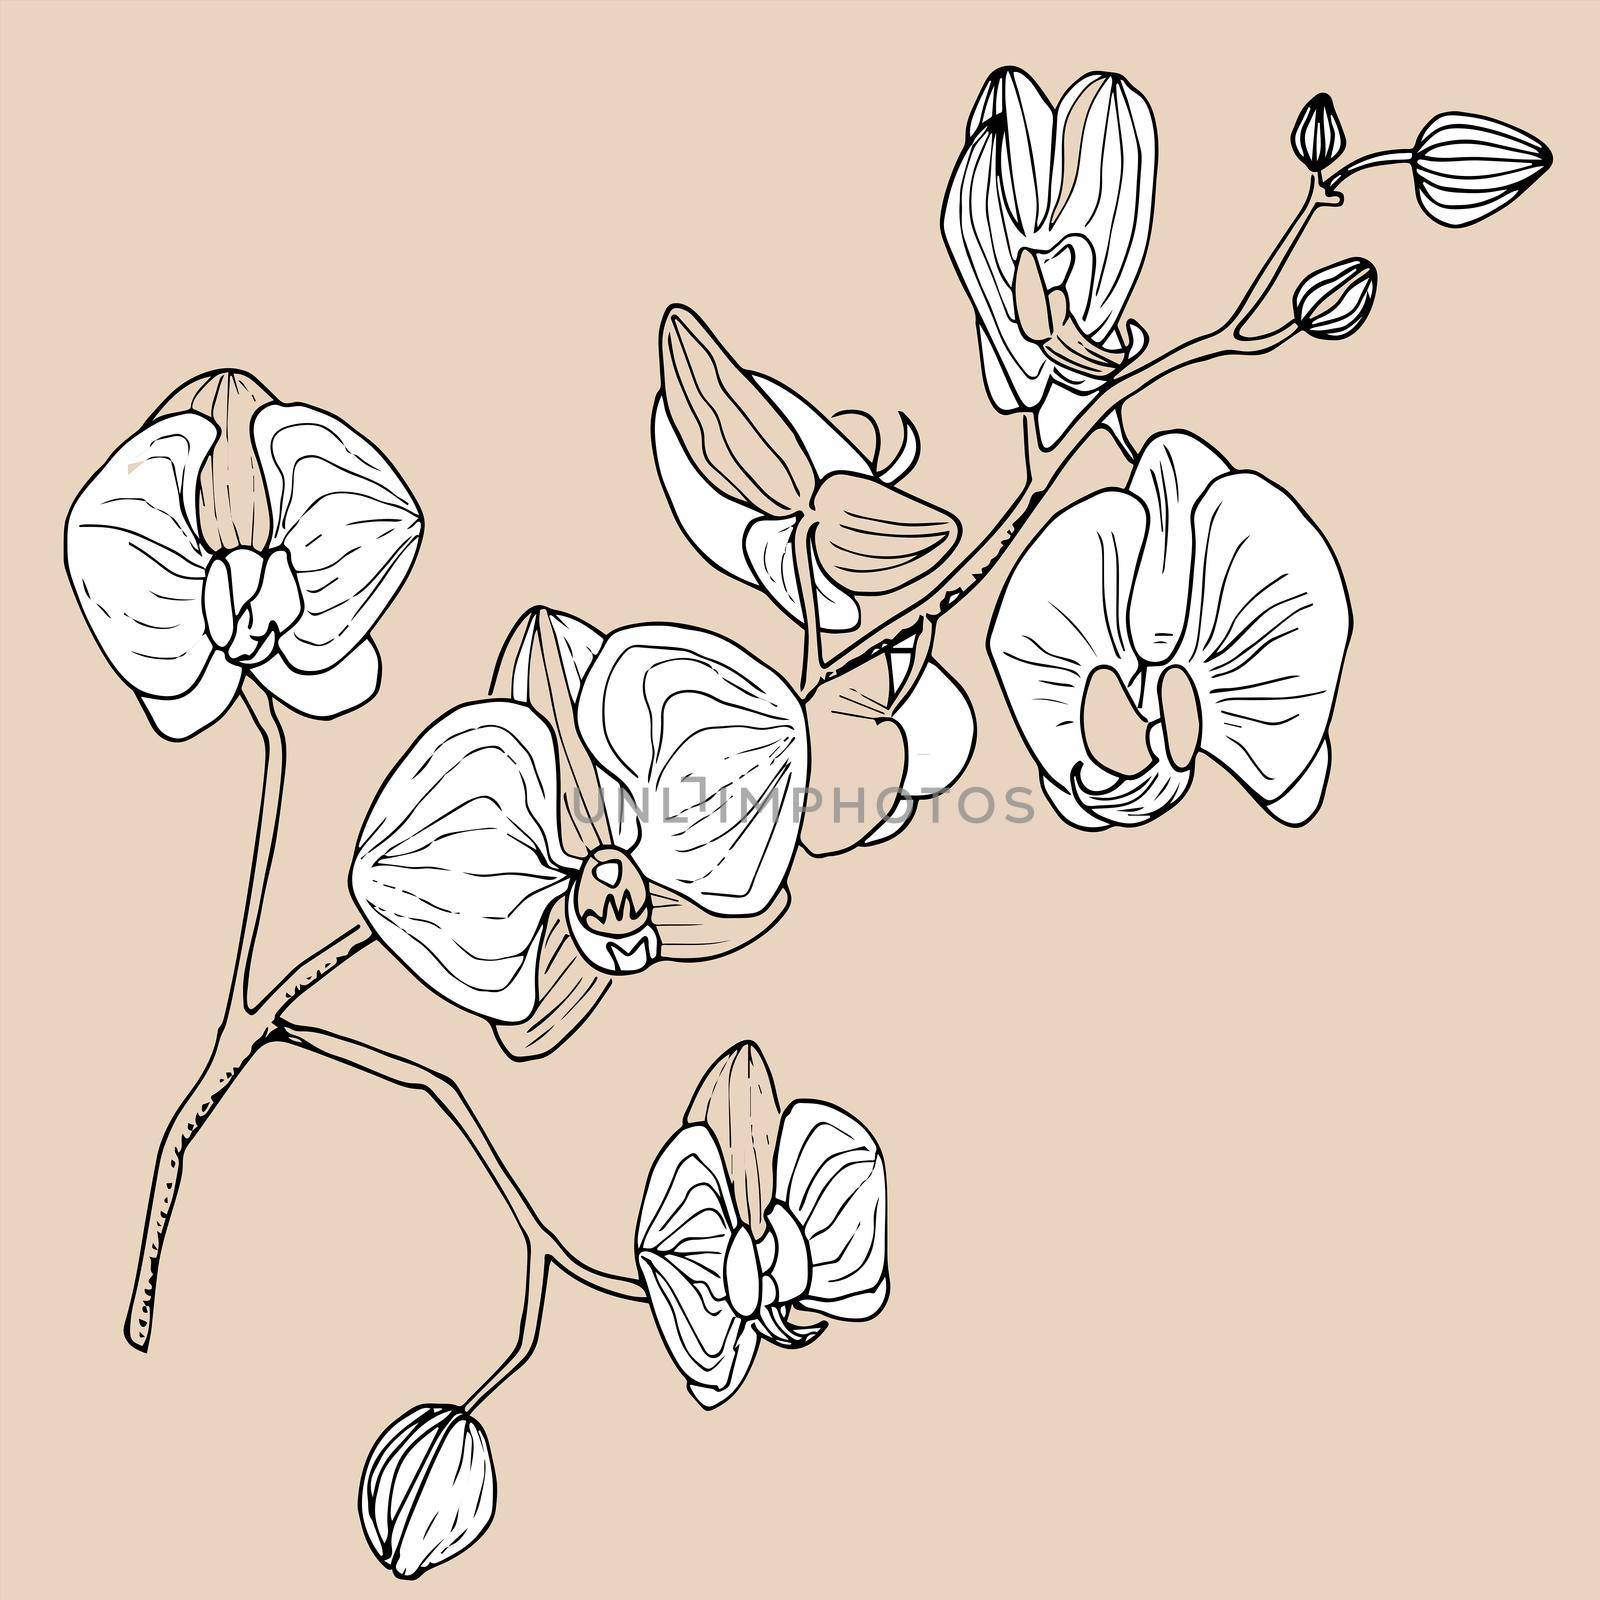 Orchids illustration on a beige background